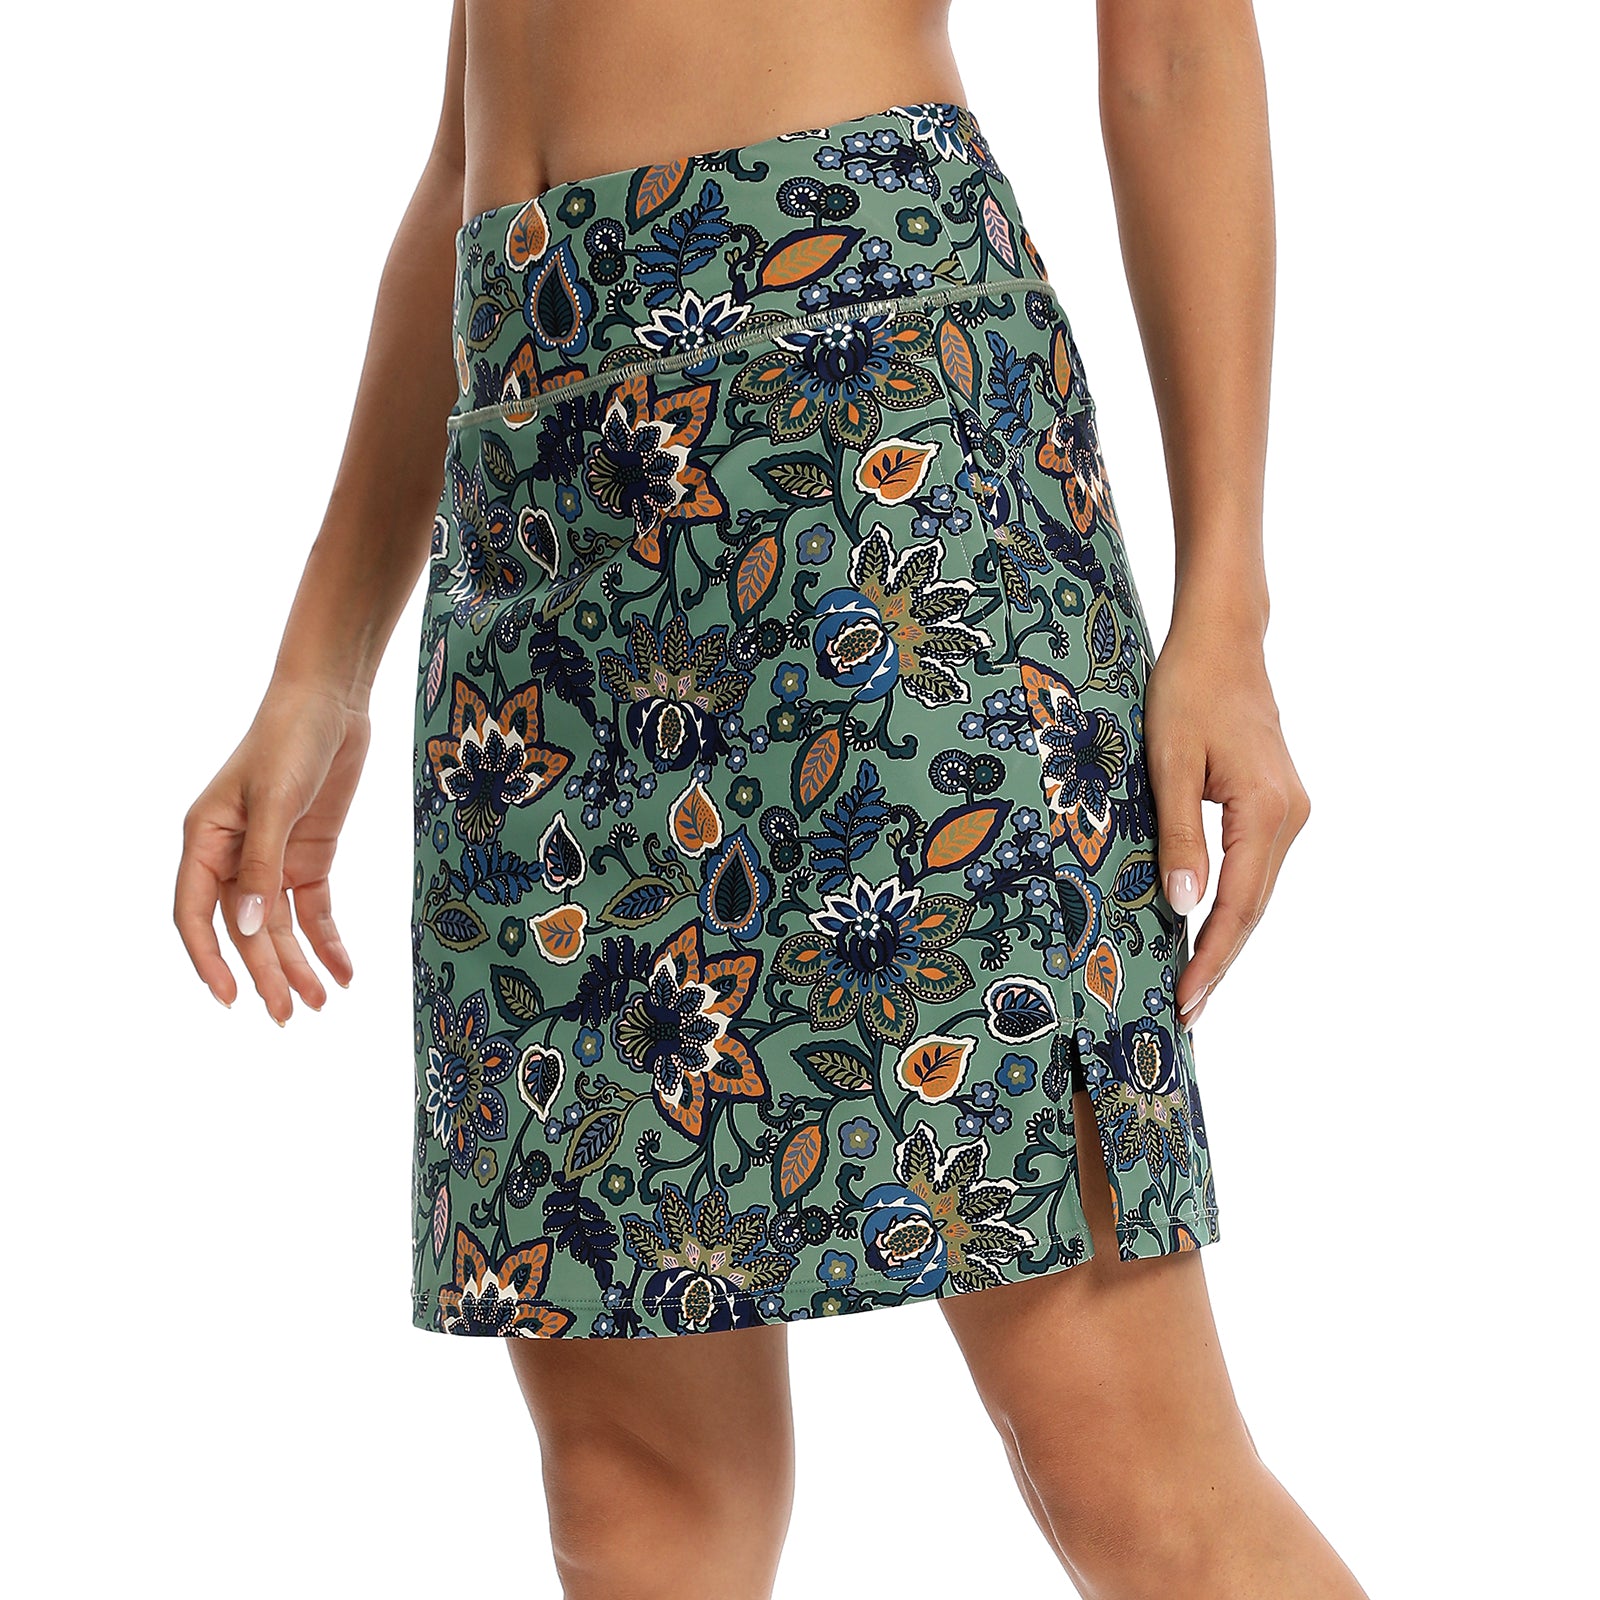 MOTEEPI Skorts Skirts for Women 20" Athletic Golf Skort with Pockets Casual Dressy High Waist